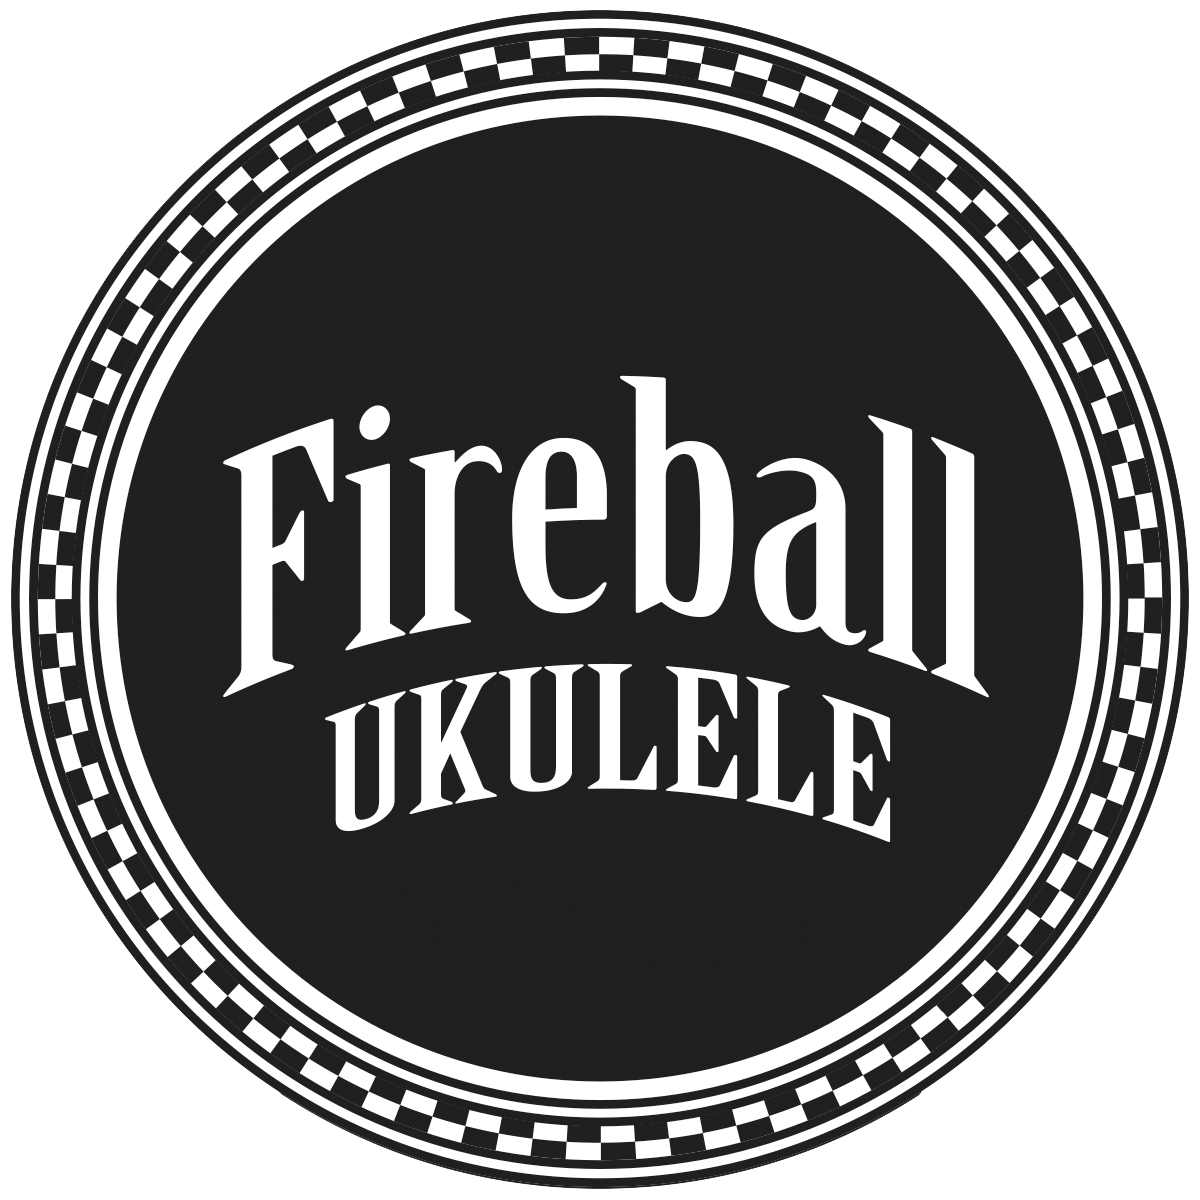 Fireball Ukulele